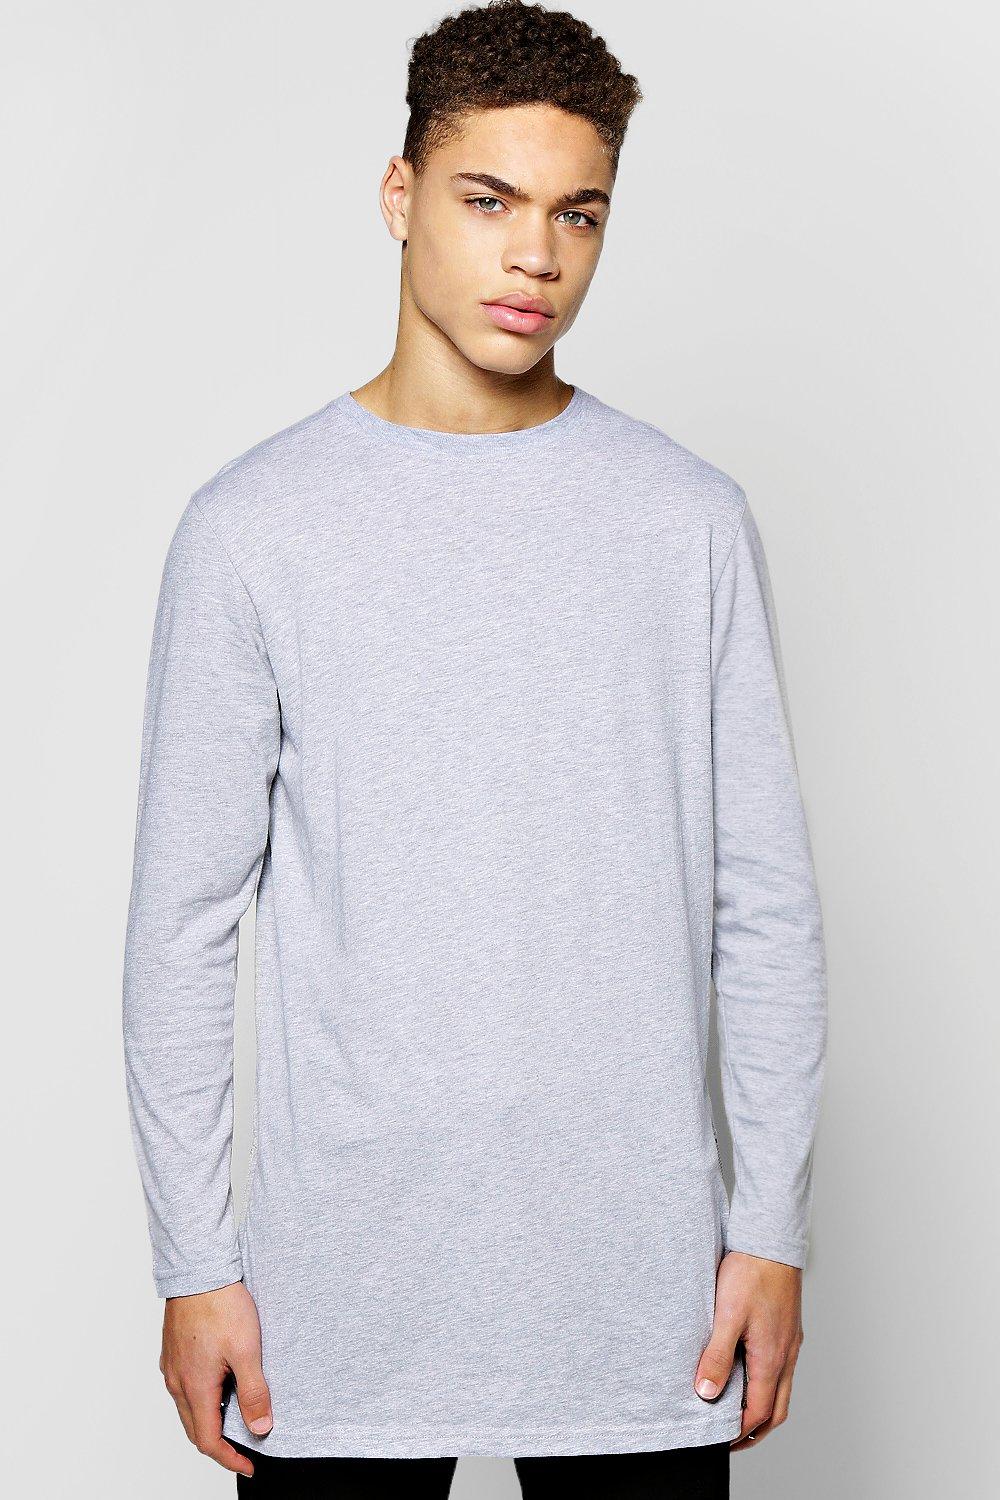 Boohoo Mens Longline T Shirt With Side Zips | eBay